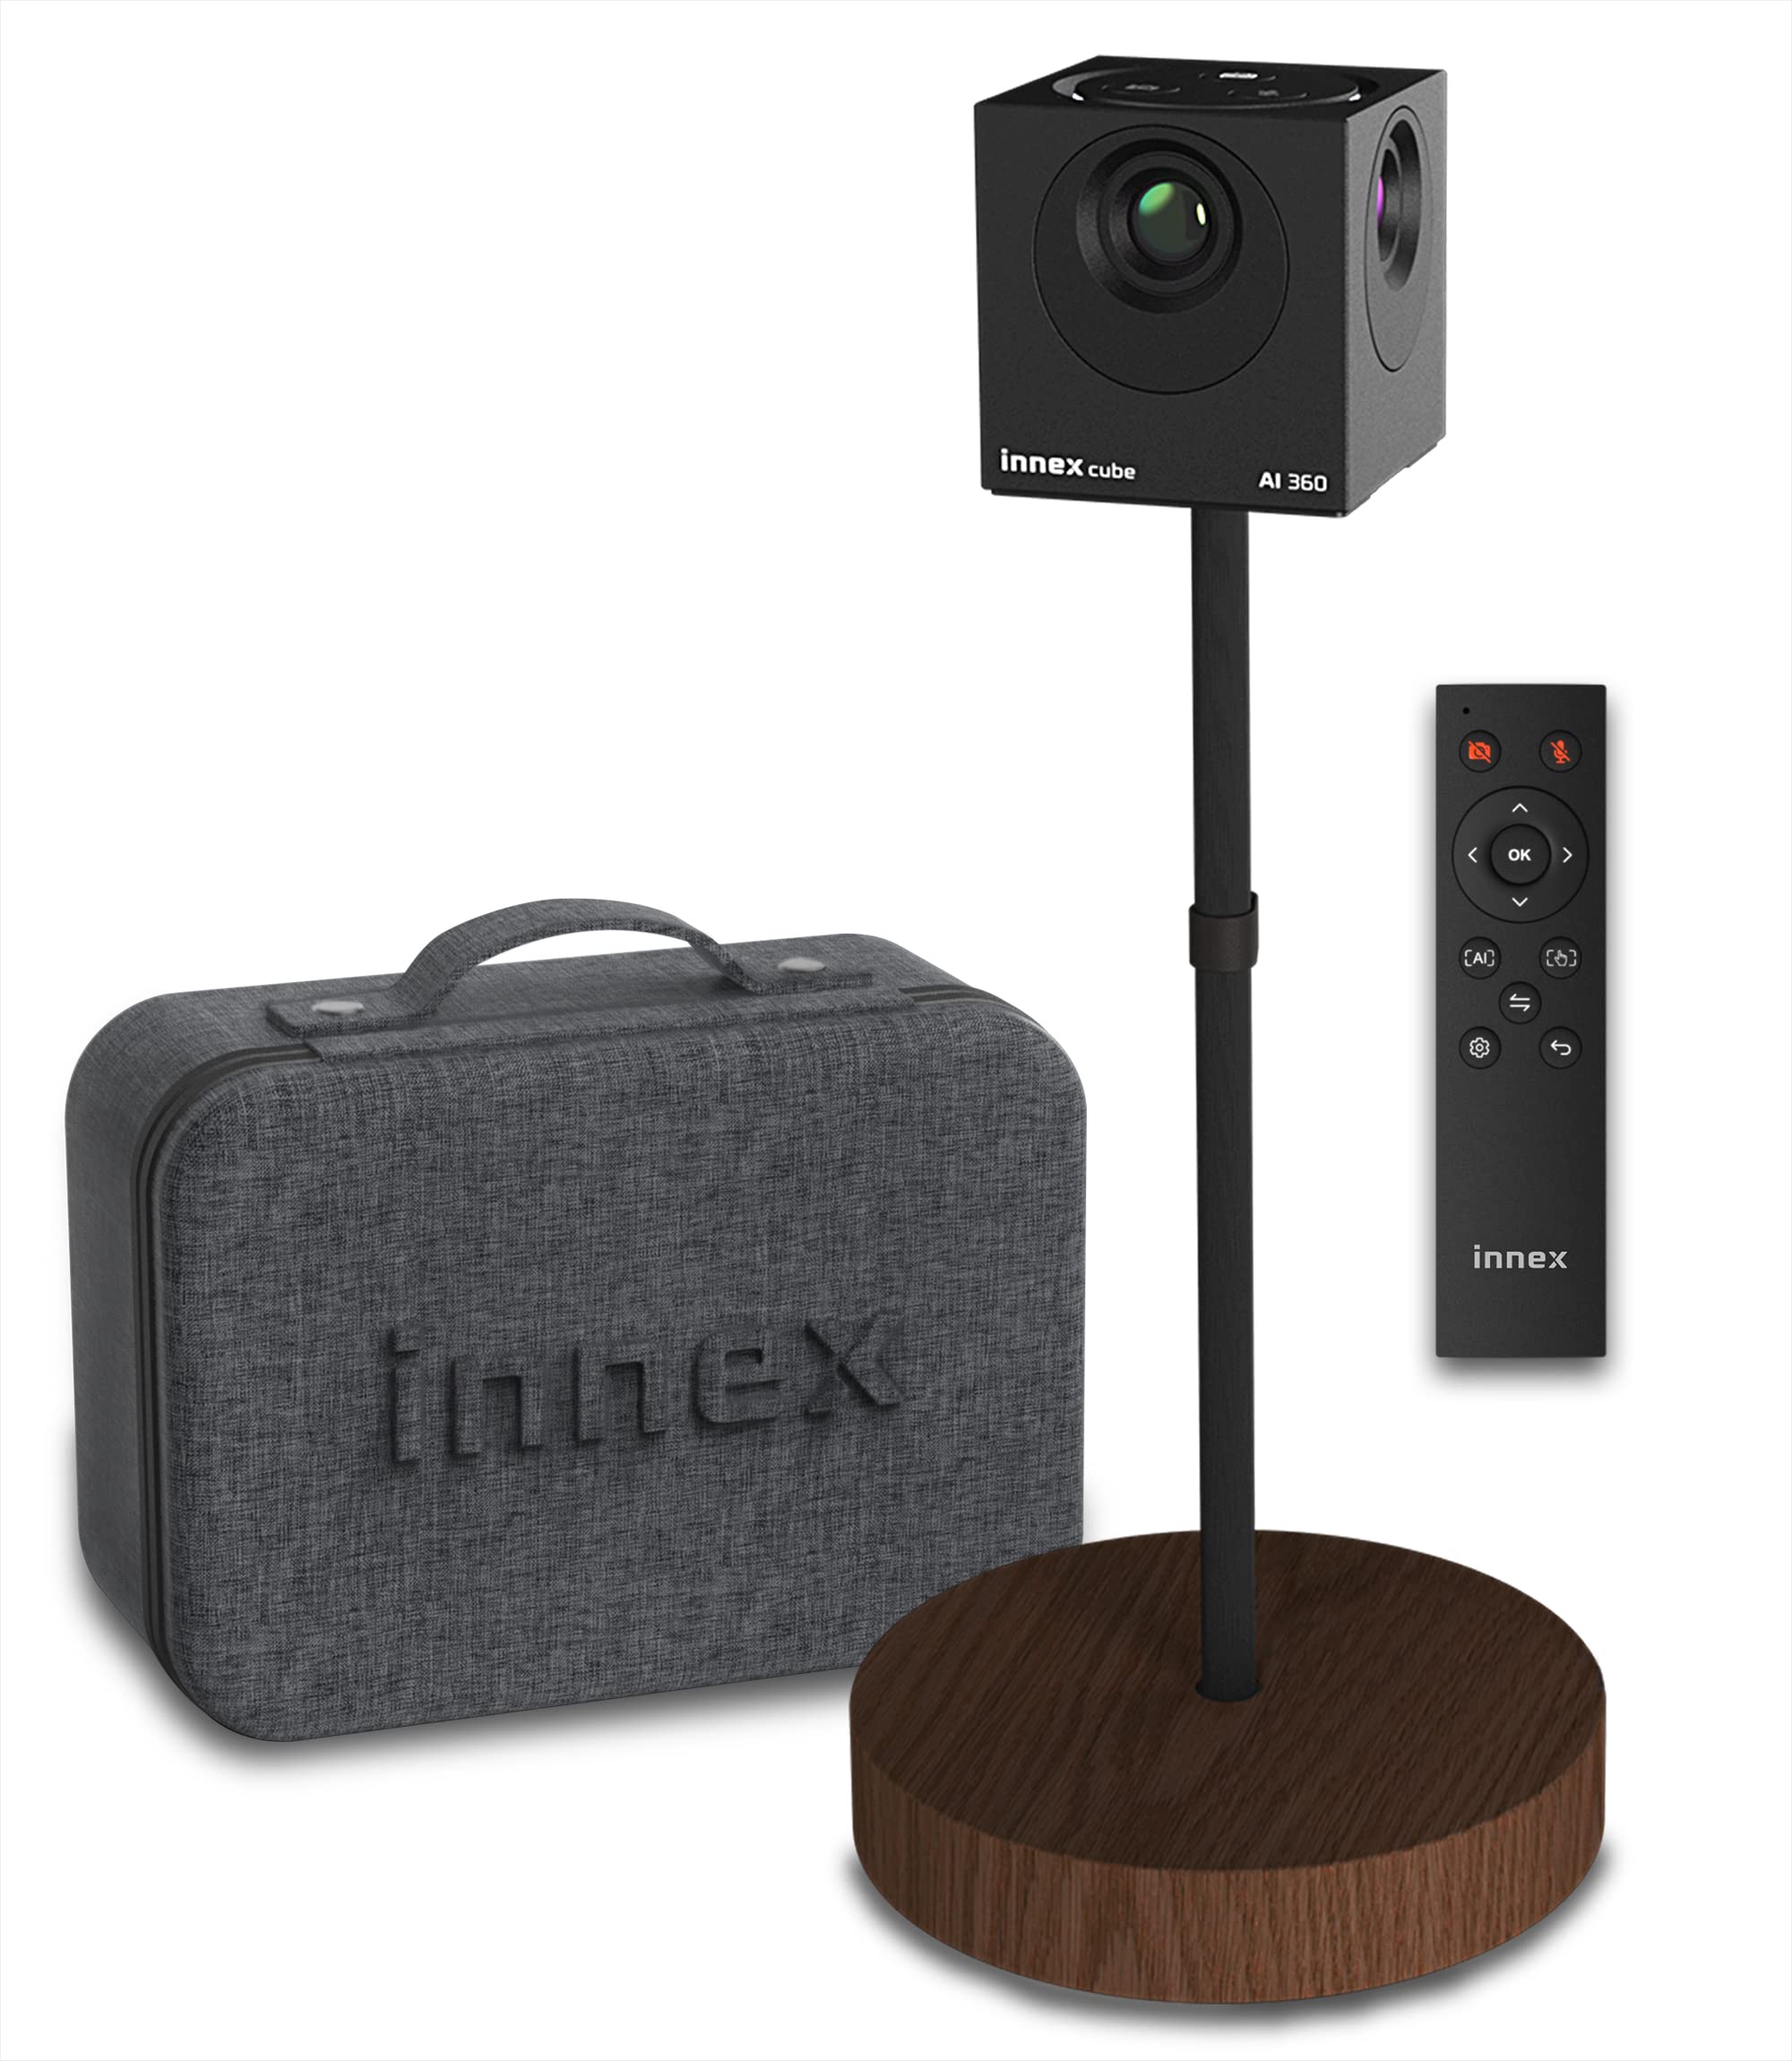 Innex Cube 会議用360度広角Webカメラ ギャラリーモードなど多彩なAIモード 電源&ソフトウェア不要の完全プラグ＆プレイリモコンでの手動ePTZ操作にも対応 無指向性マイク内蔵 Zoom Teams WebEx GoogleMeet